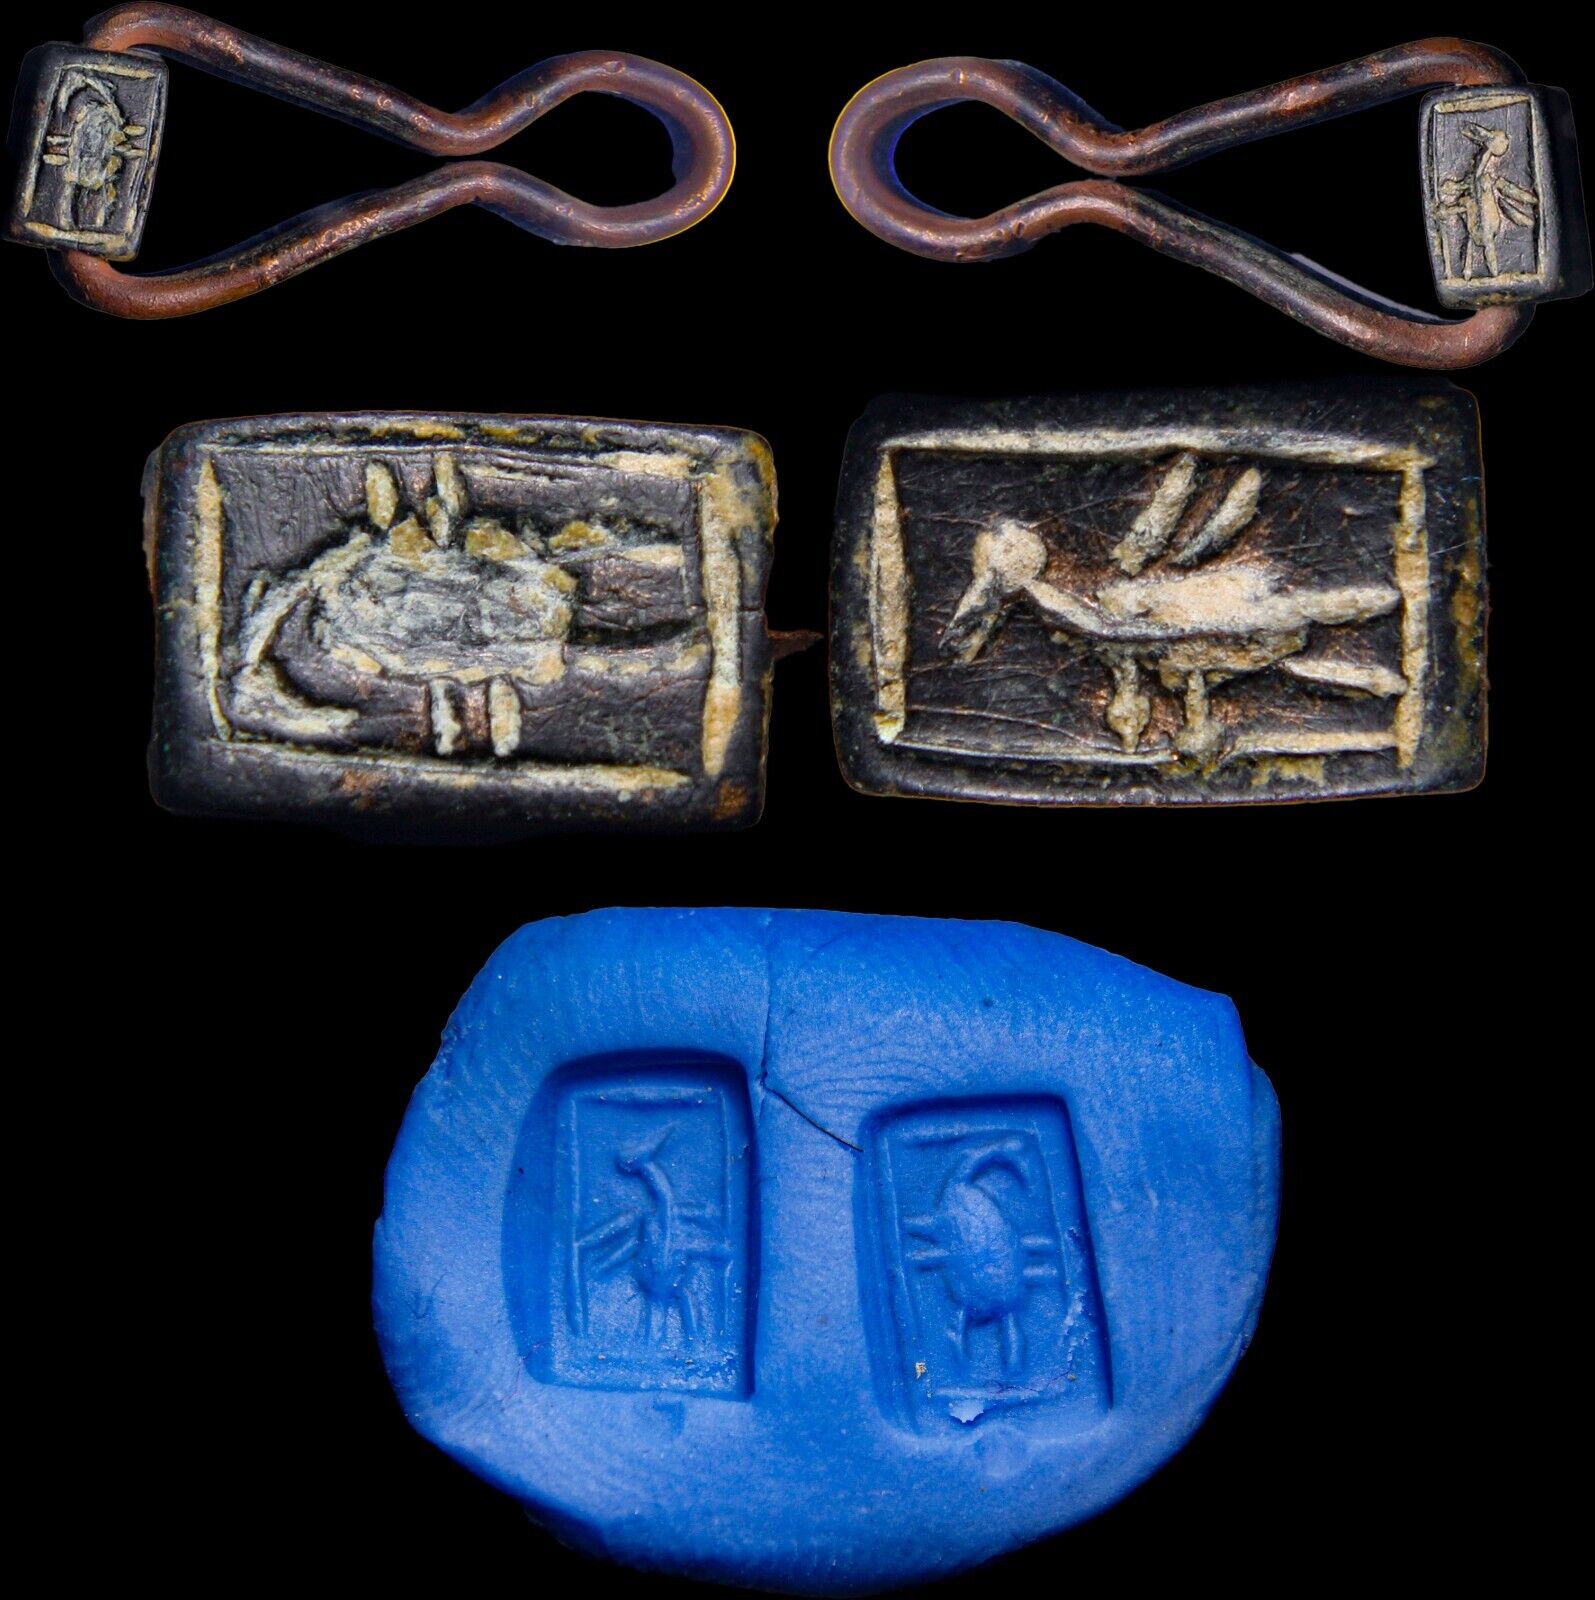 RRR 3000BC West Asia Mesopotamia Seal Bird Scorpion ESOTERIC Antiquity Artifact